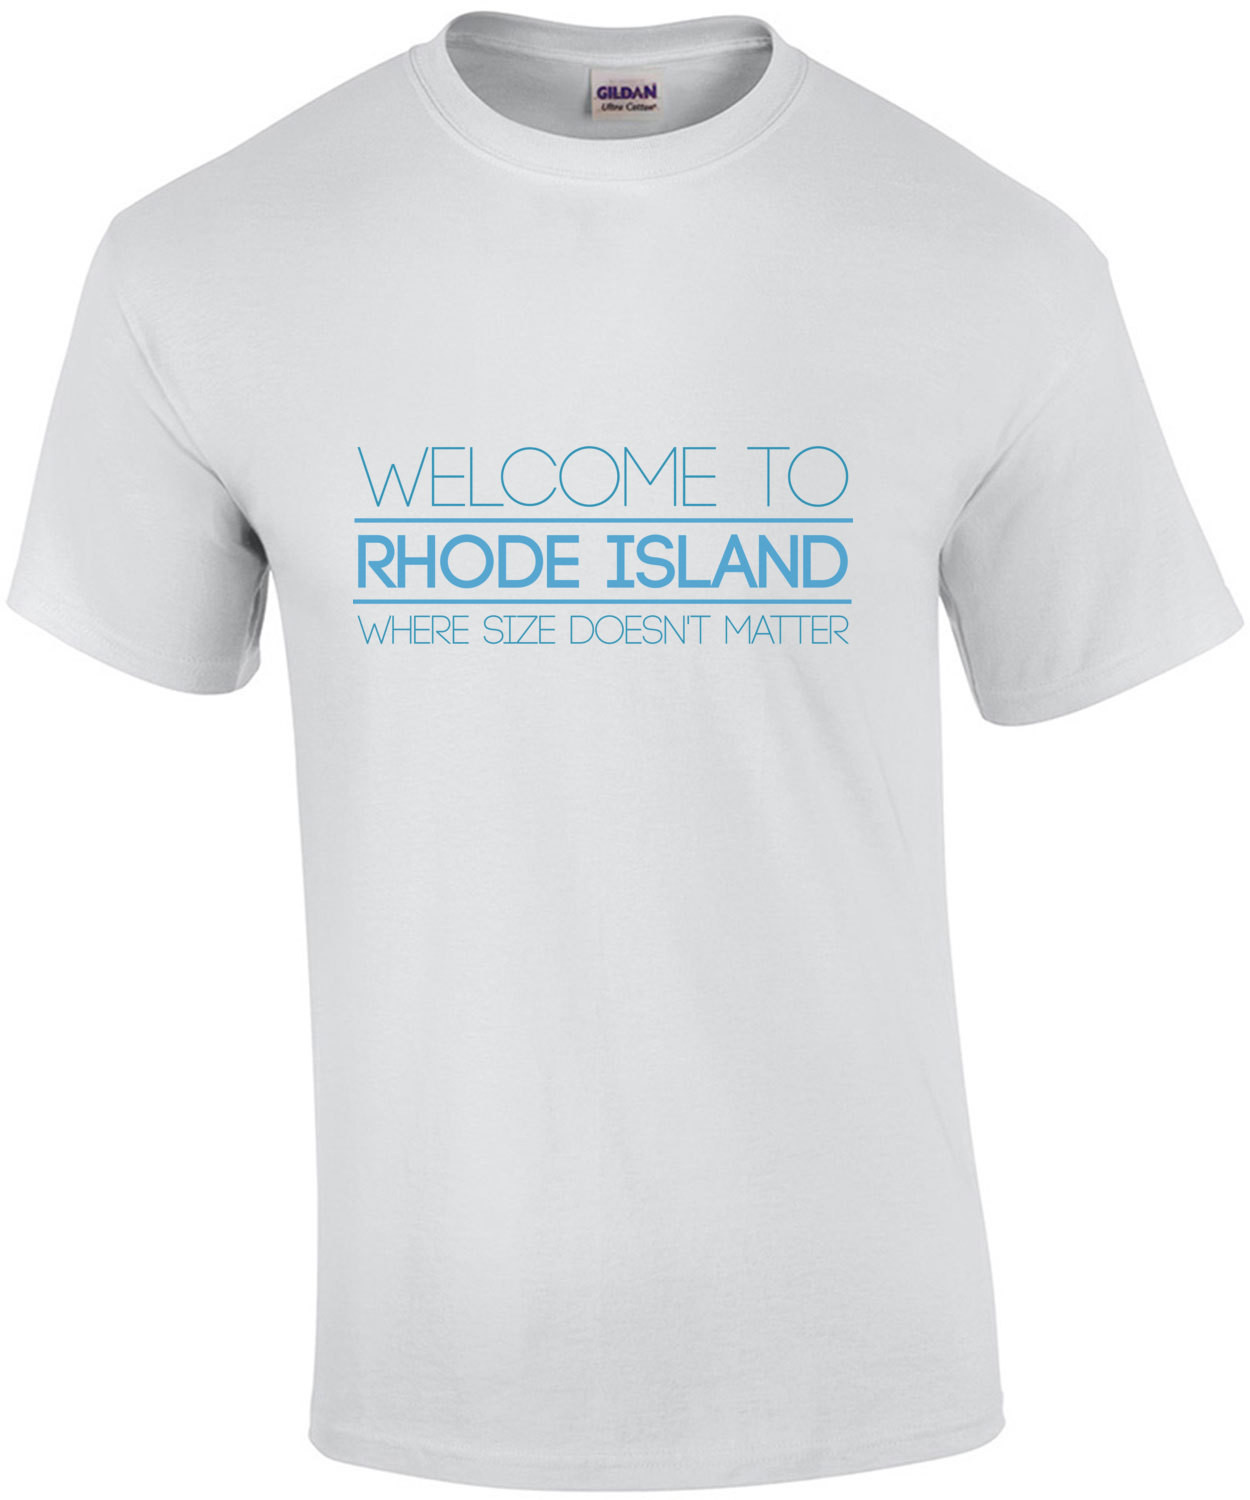 Welcome to Rhode Island - Where size doesn't matter. Rhode Island T-Shirt